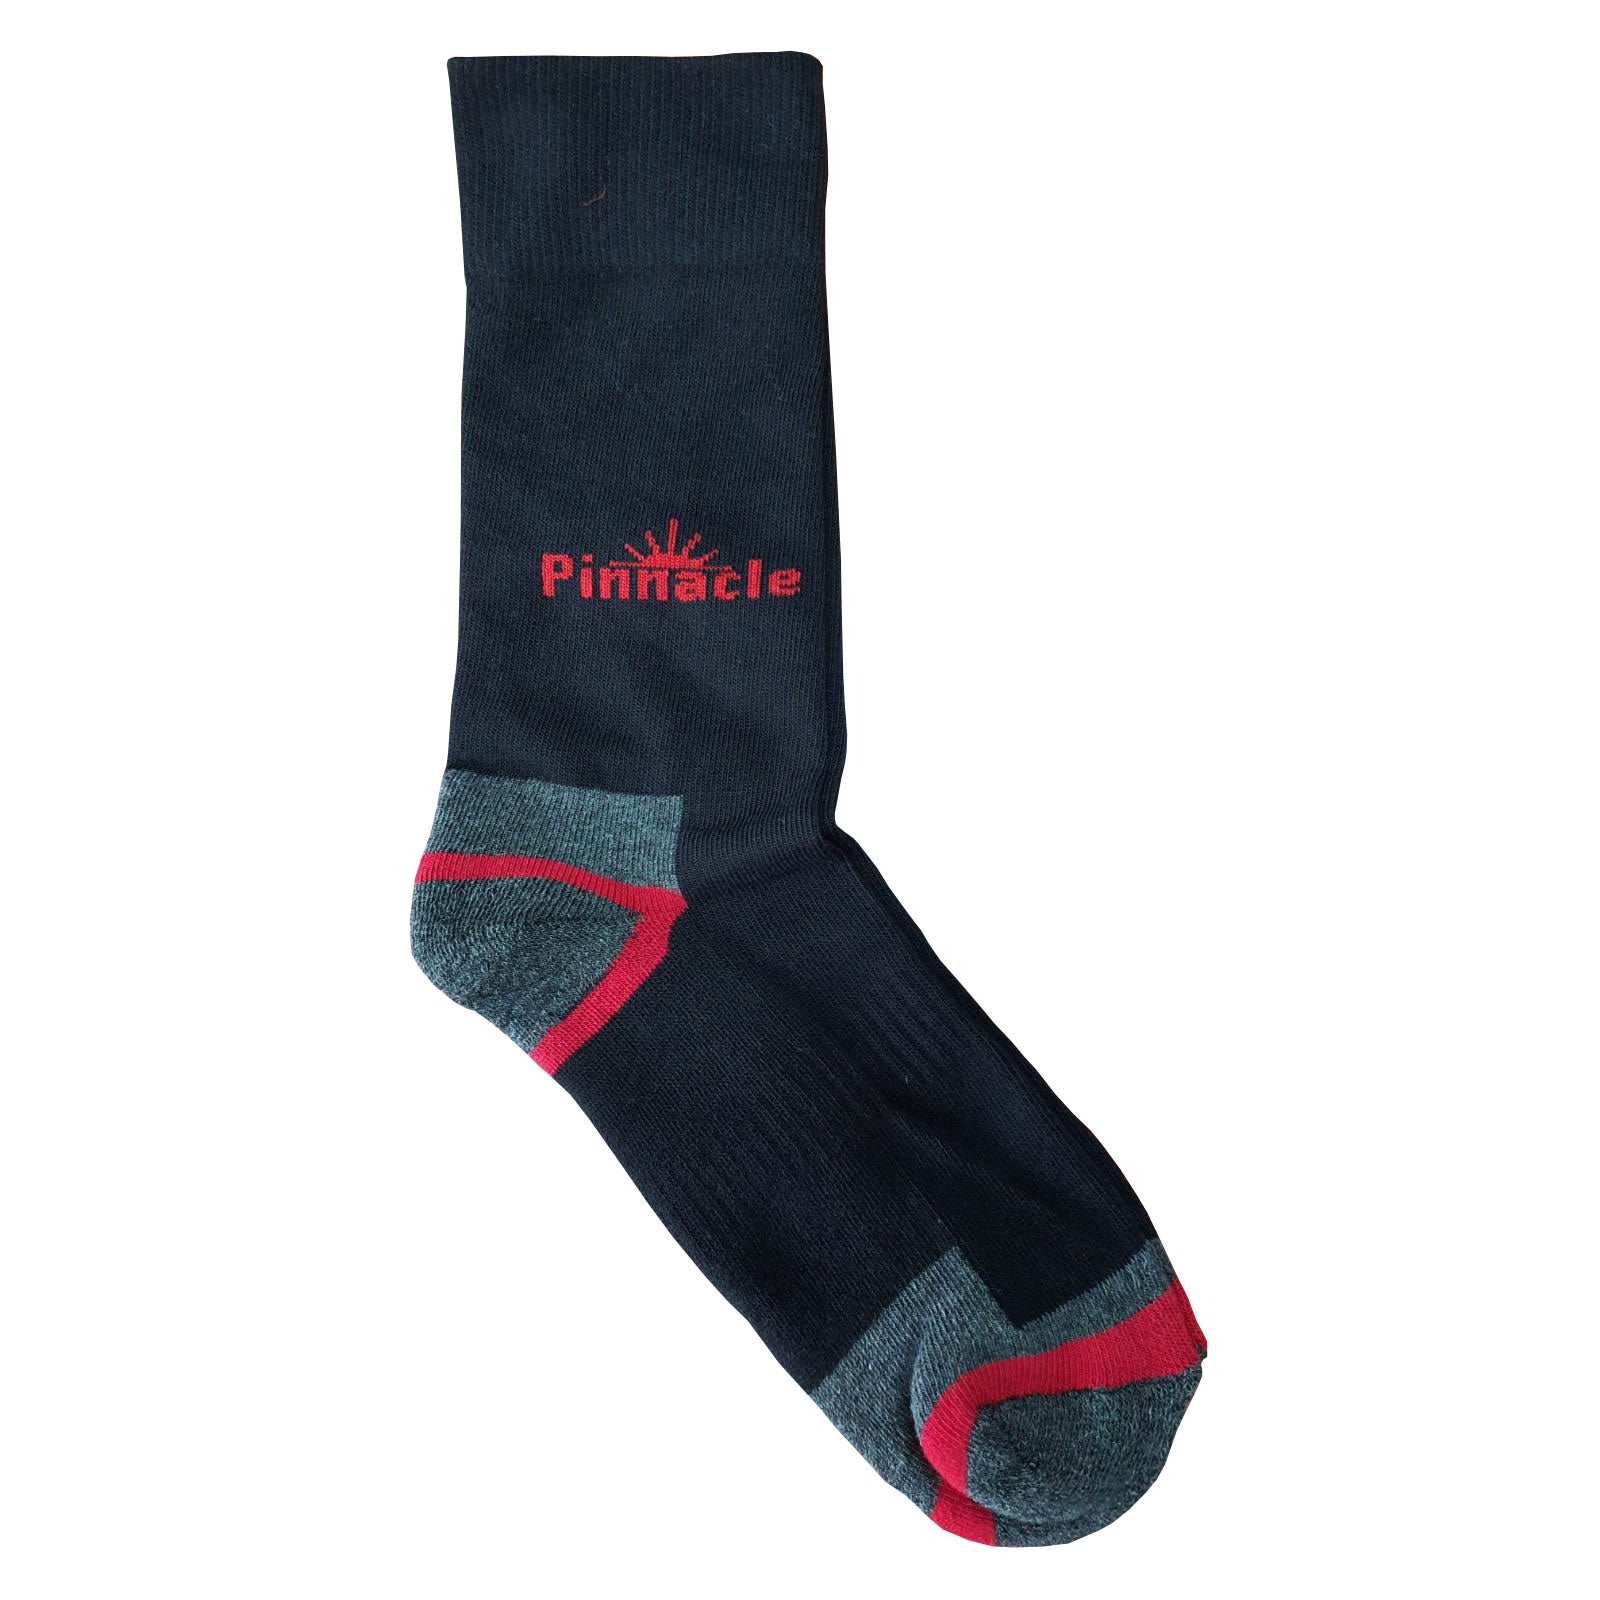 Pinnacle Cushioned Workwear Socks